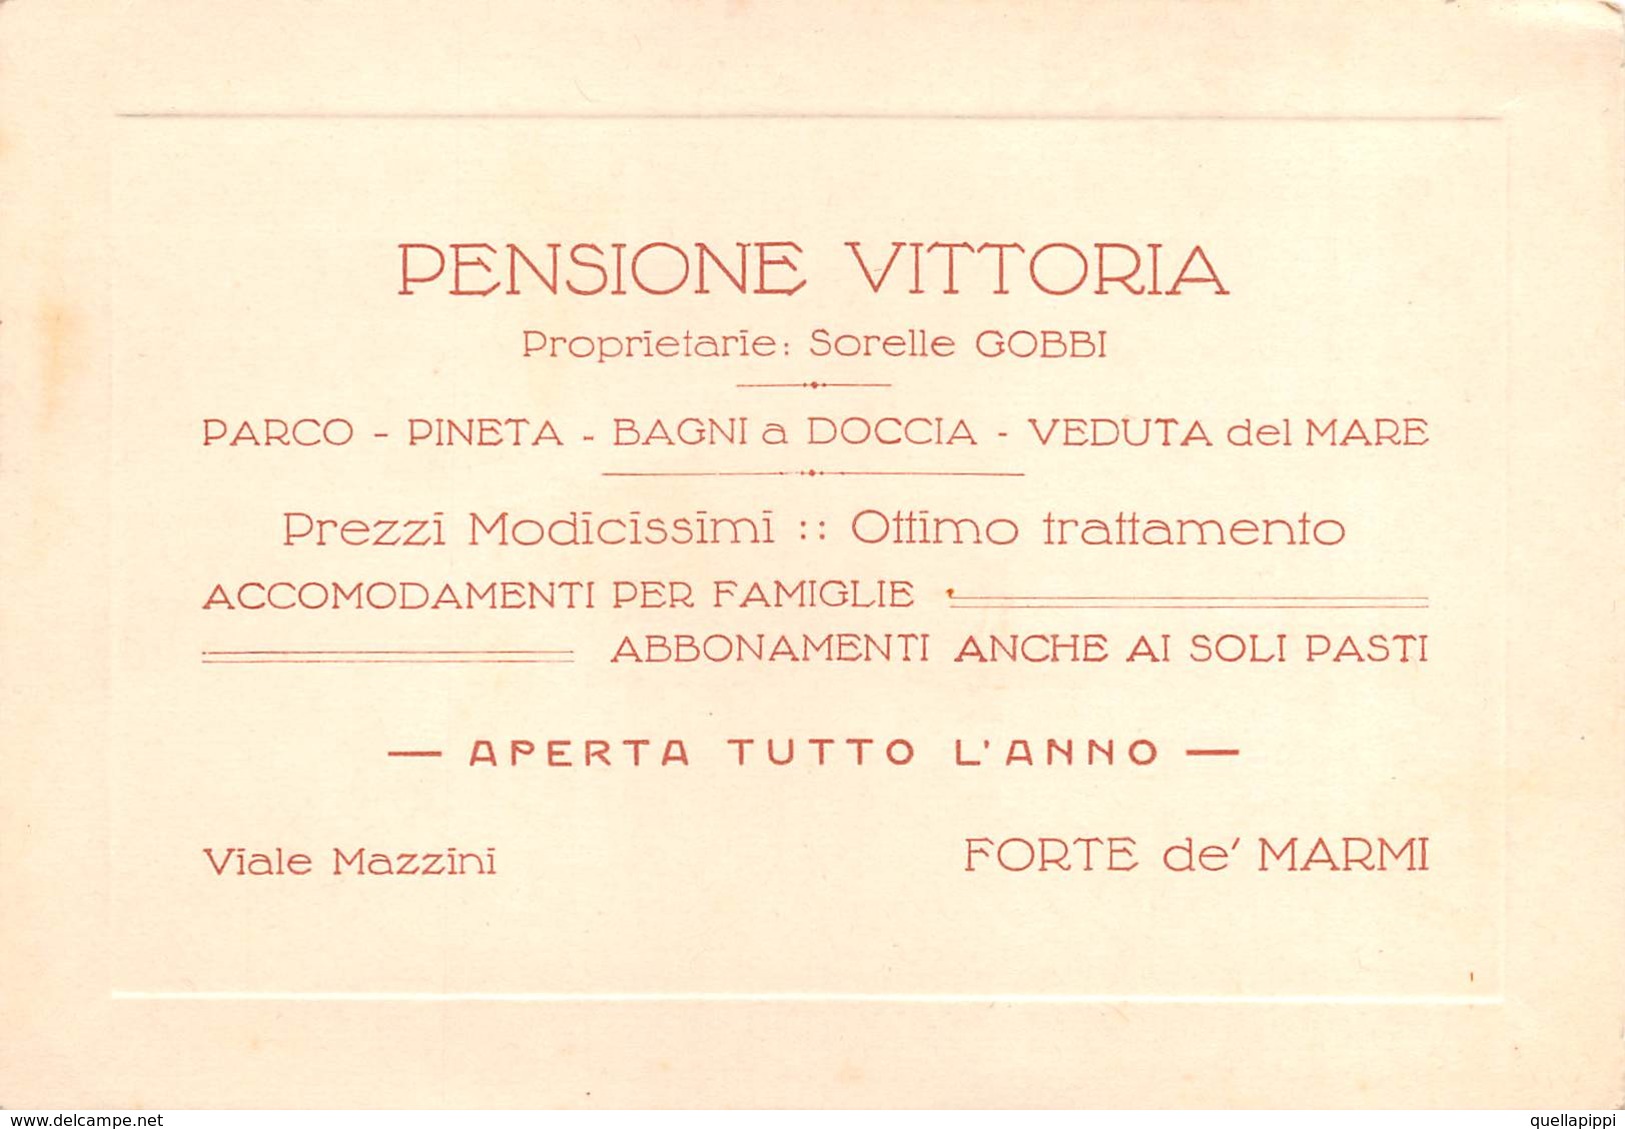 07832 "PENSIONE VITTORIA - PROPR. SORELLE GOBBI - VIALE MAZZINI - FORTE DE' MARMI (LU)" ORIGINALE - Cartes De Visite